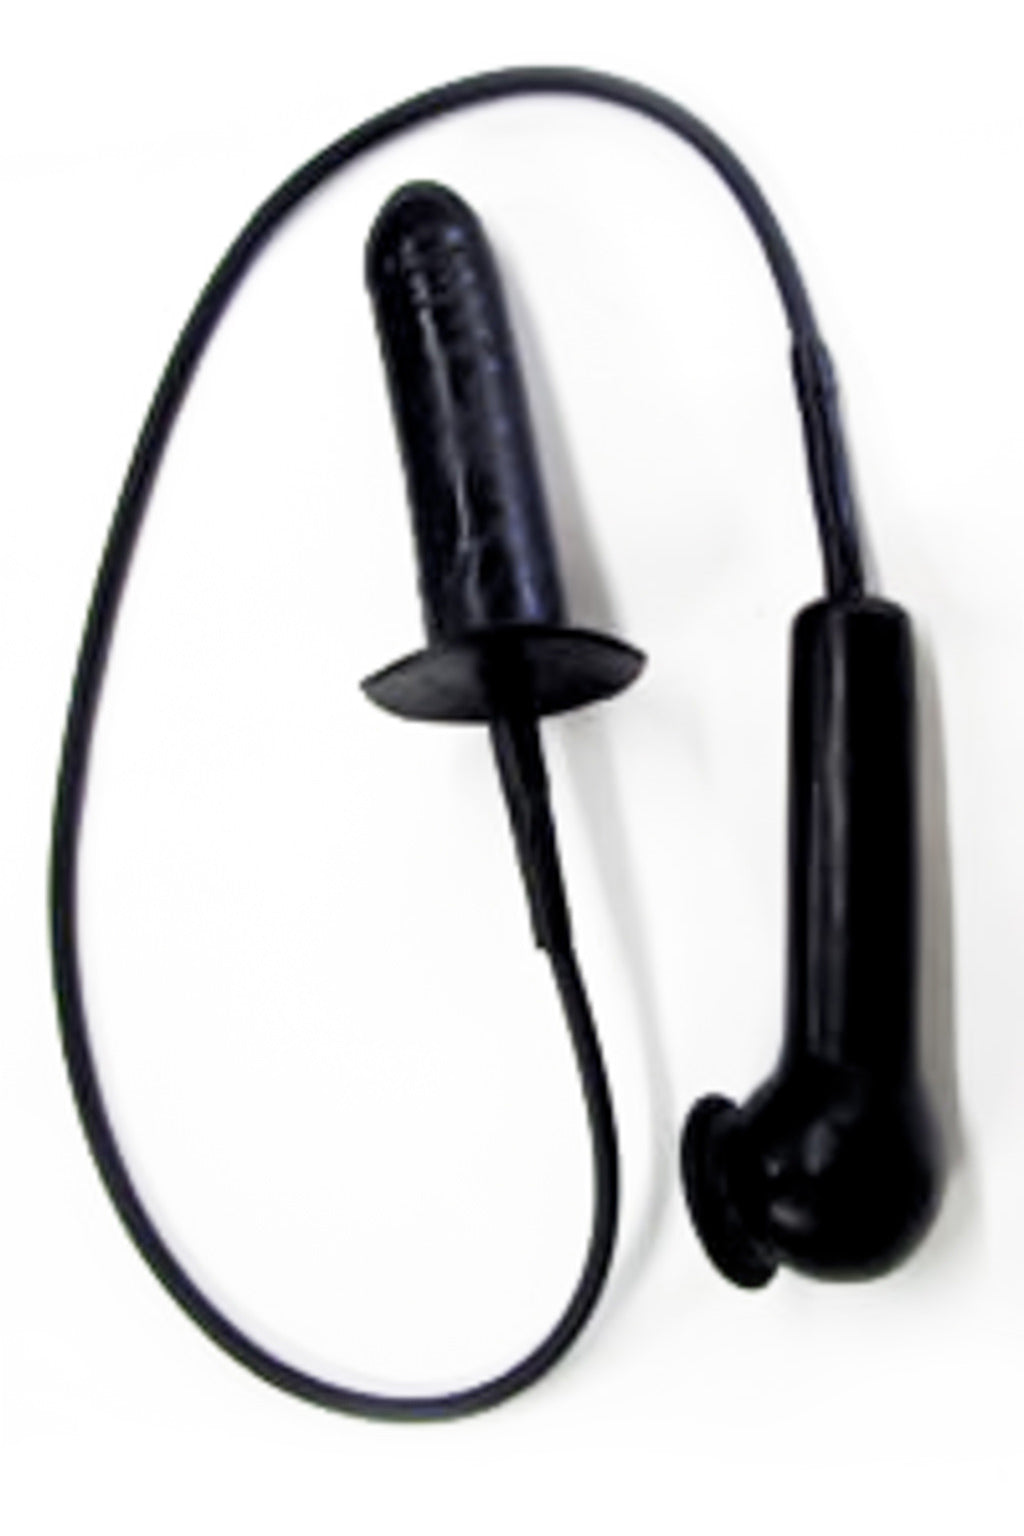 Latex enema gear. A penis sheath attaches to a large solid penis plug via a thin tube.